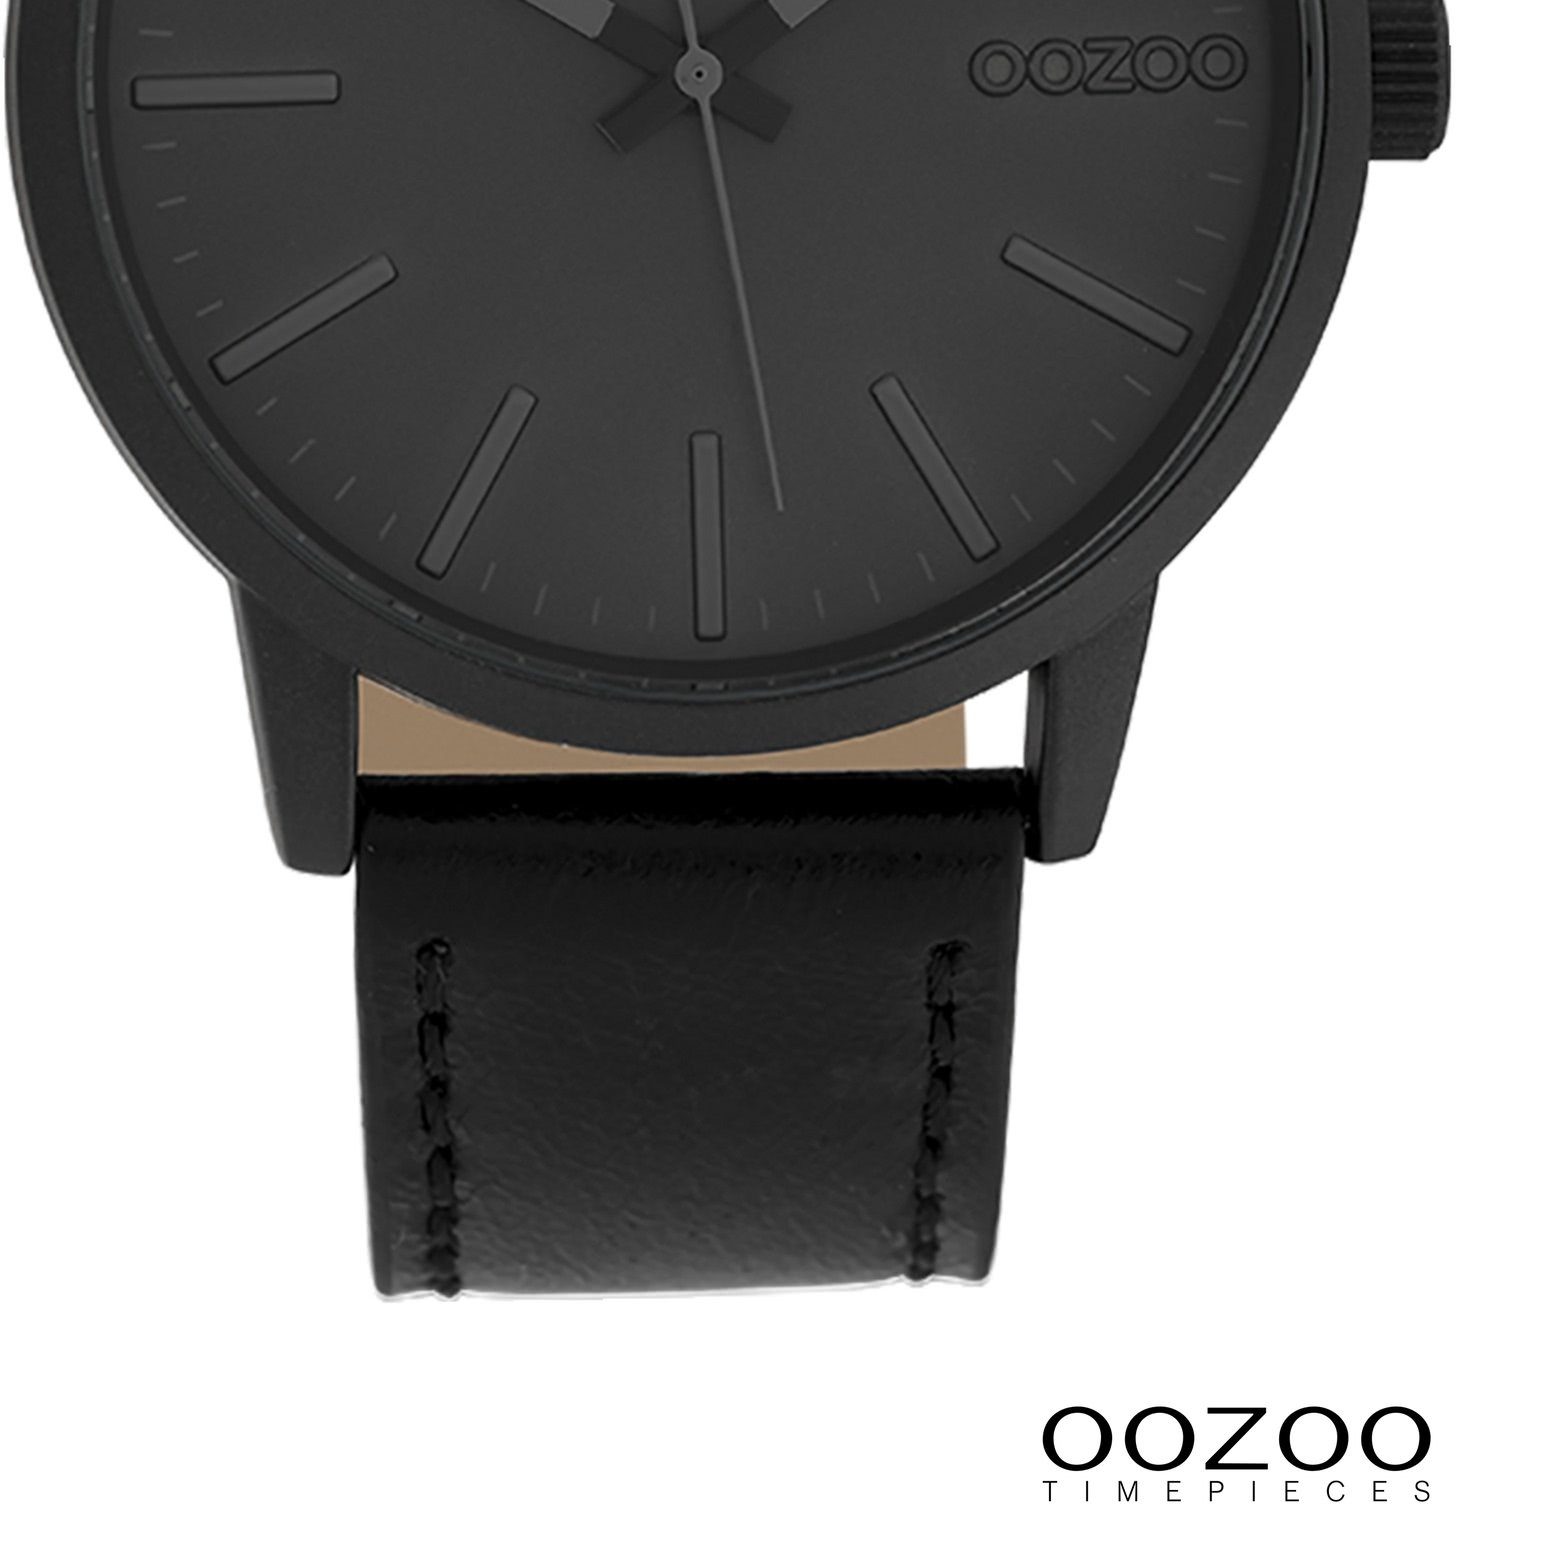 Analog, Fashion-Style Damen Timepieces 40mm) rund, Oozoo (ca. Lederarmband, Damenuhr Quarzuhr Armbanduhr extra groß OOZOO